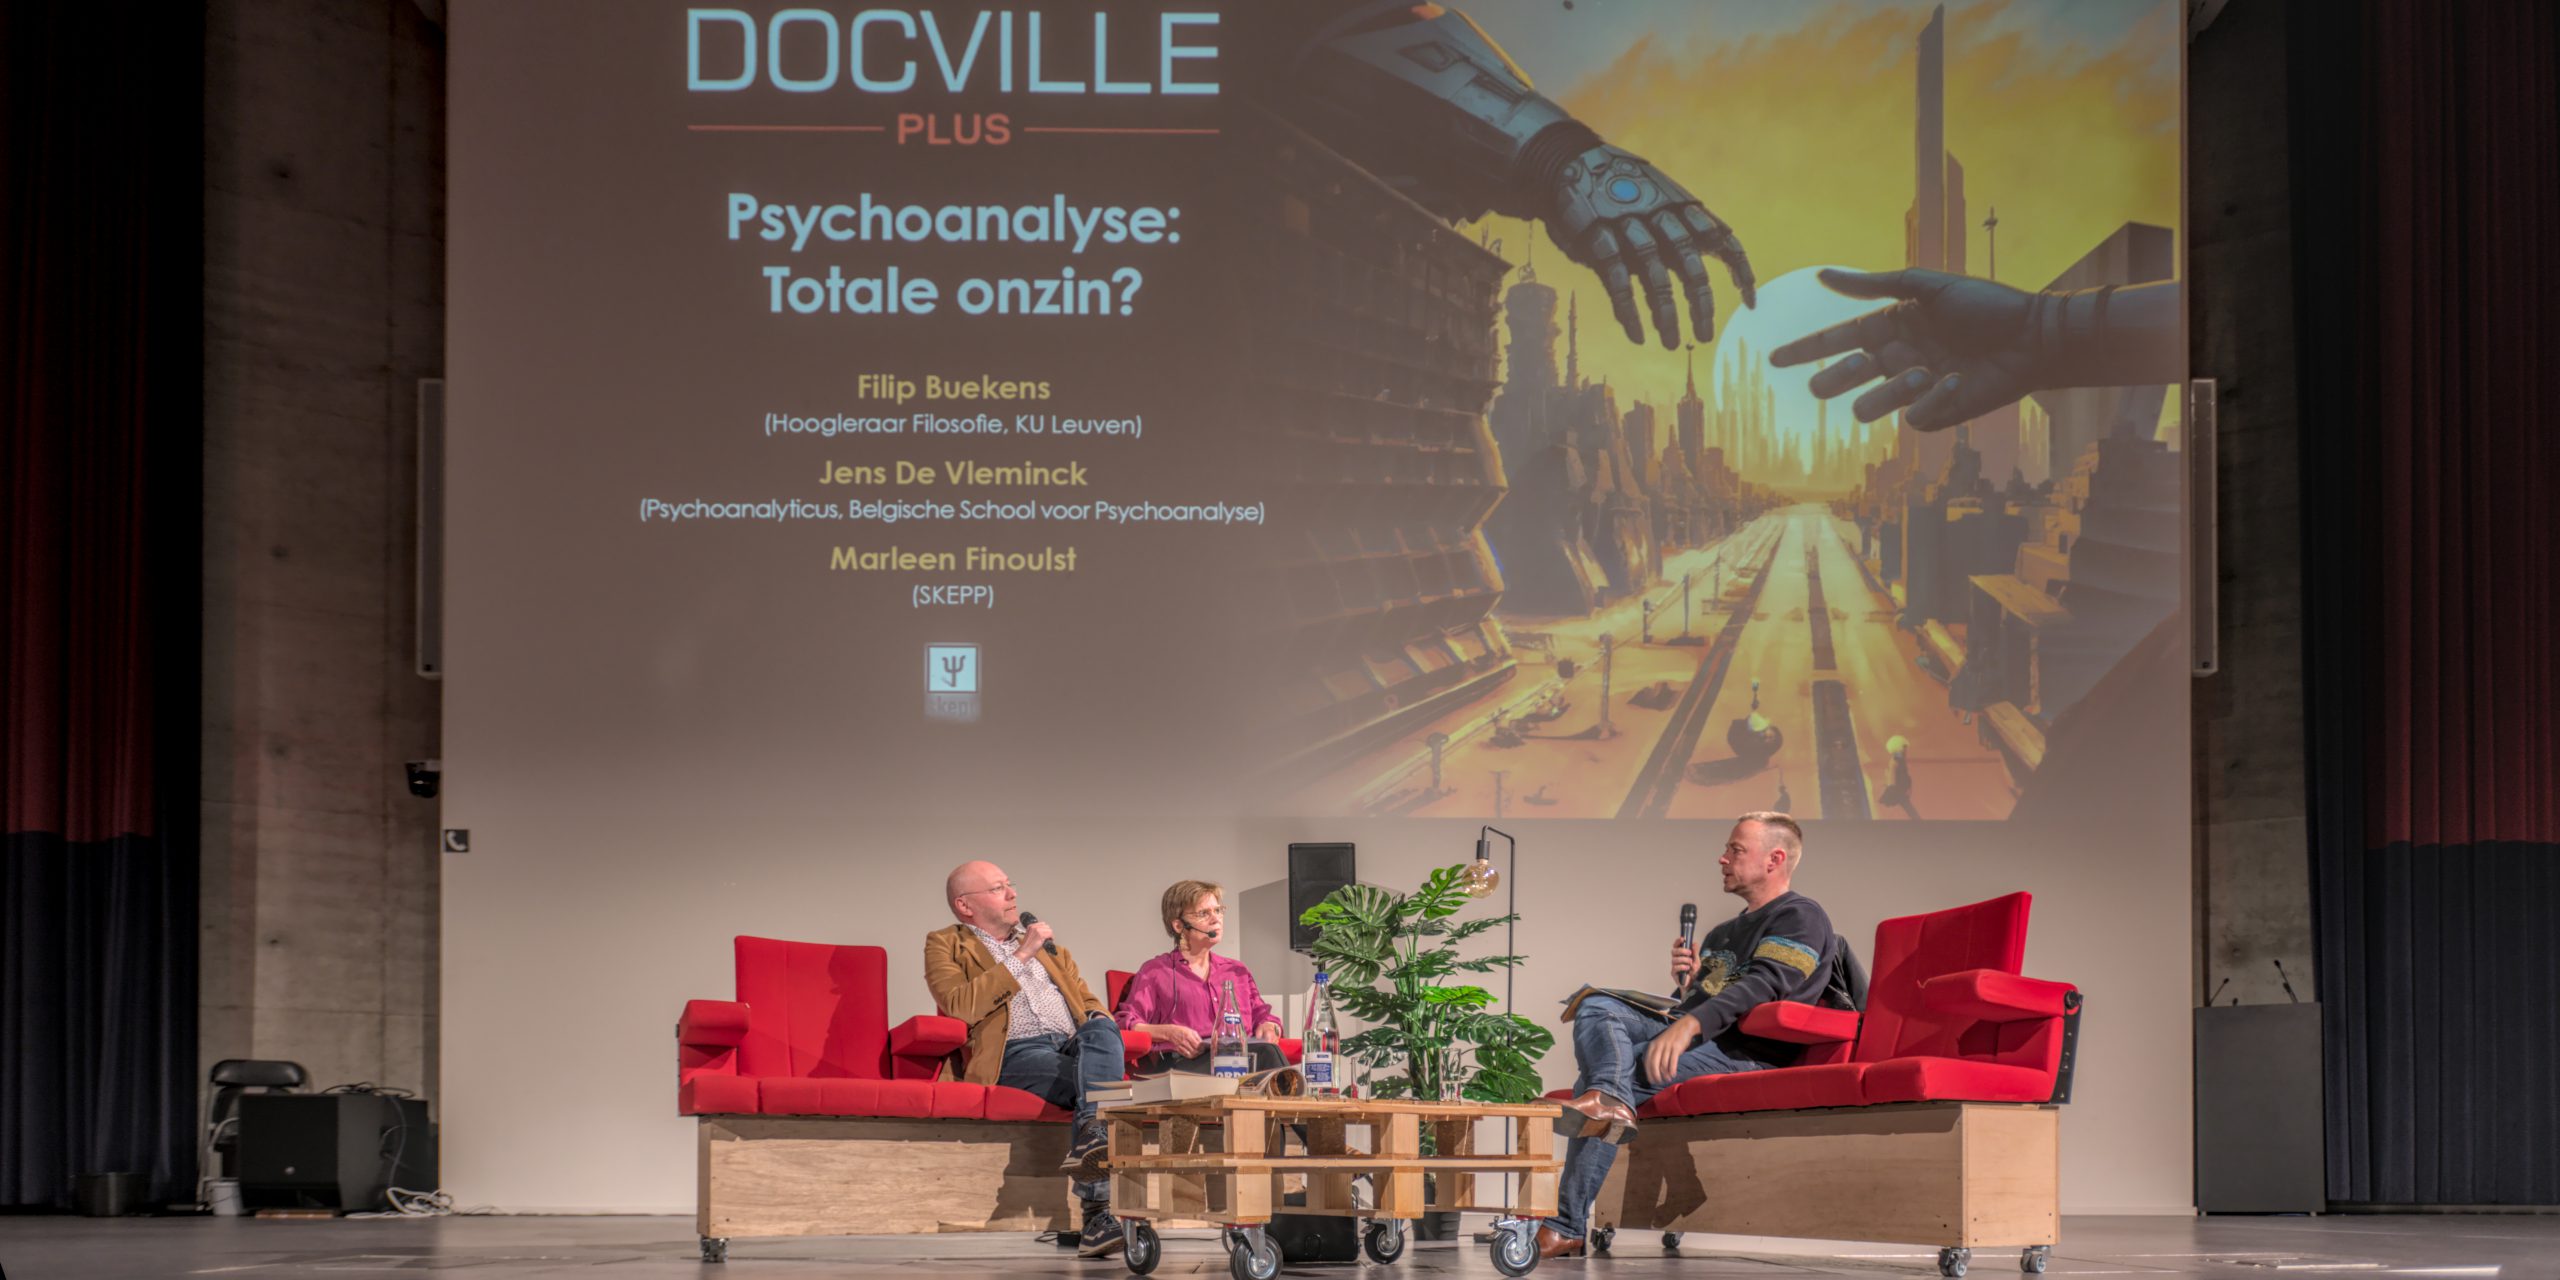 Live in DocVIlle, Psychoanalyse: Totale onzin?